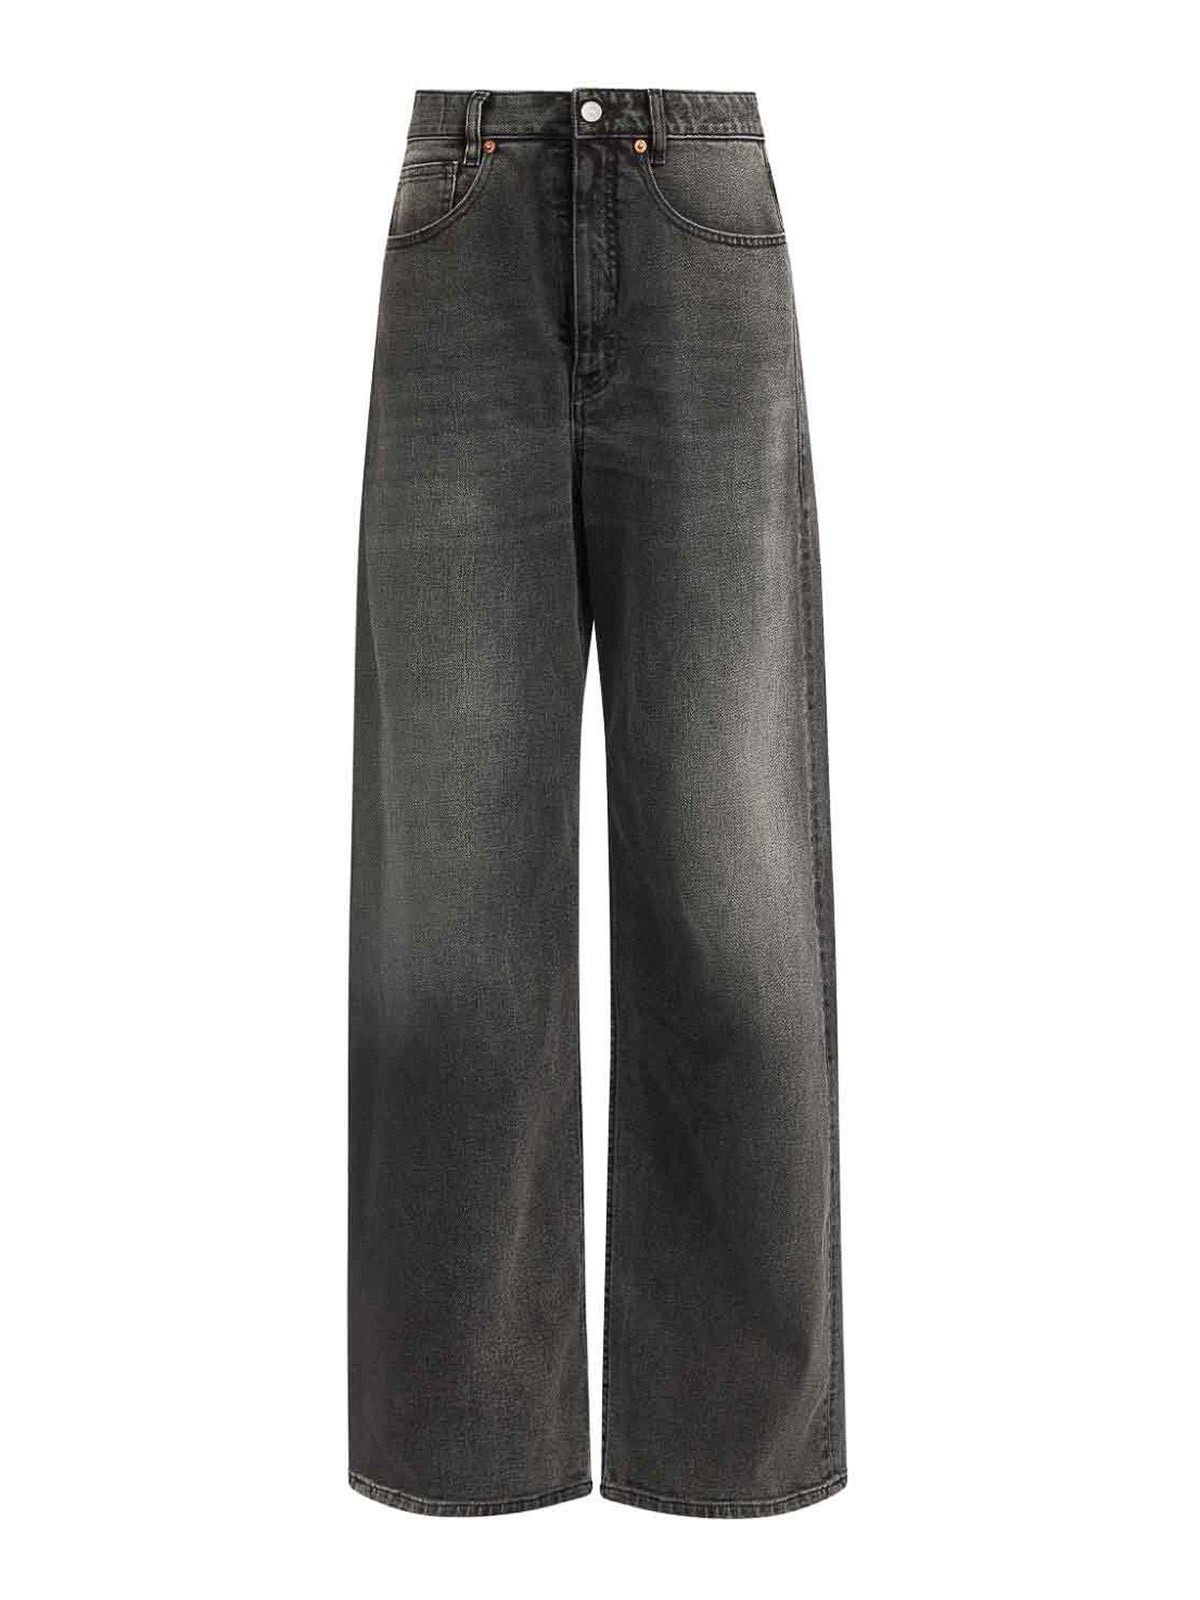 Mm6 Maison Margiela Asymmetric Design Jeans In Grey